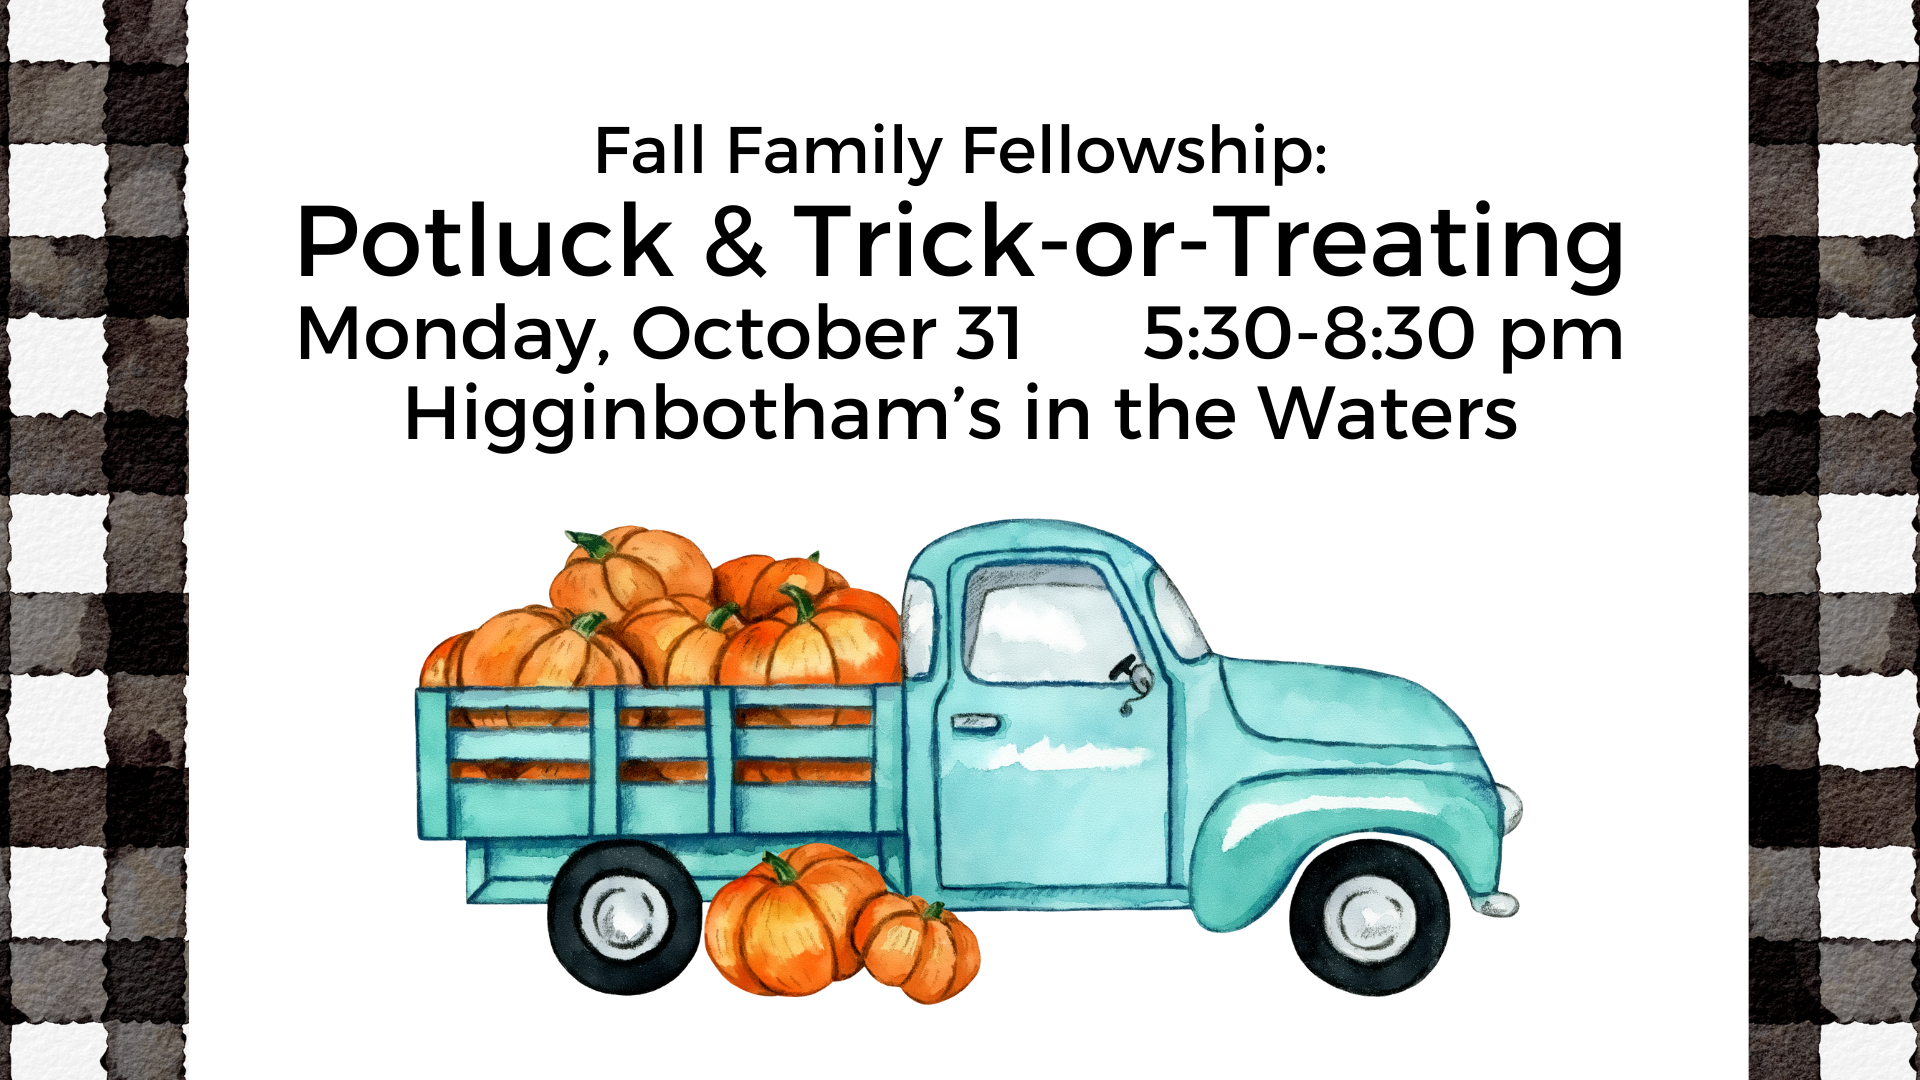 Fall Family Fellowship Potluck & Trick-or-Treating (2)